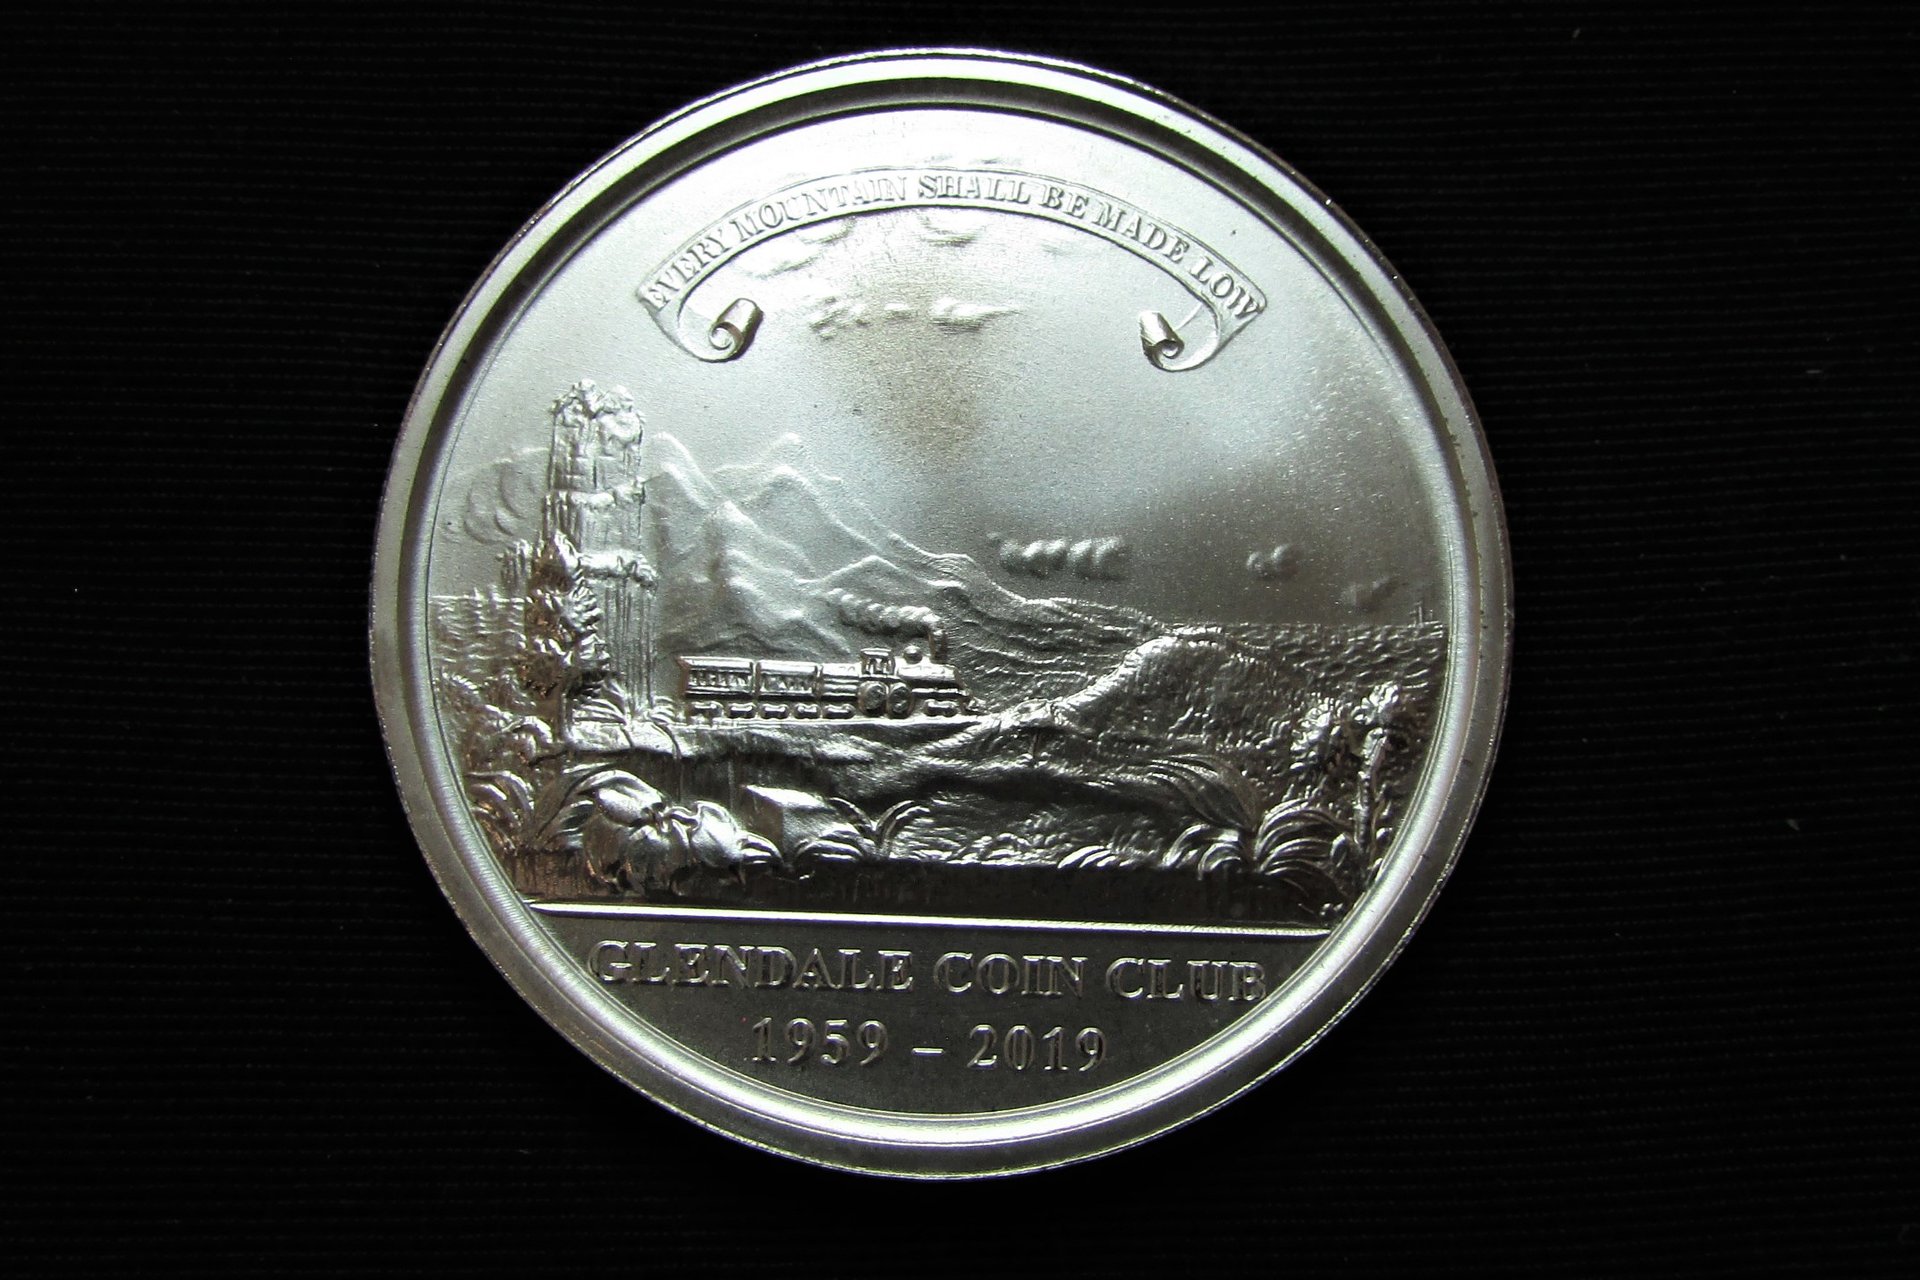 2019 Glendale Coin Club Medal (silver) - obverse.JPG